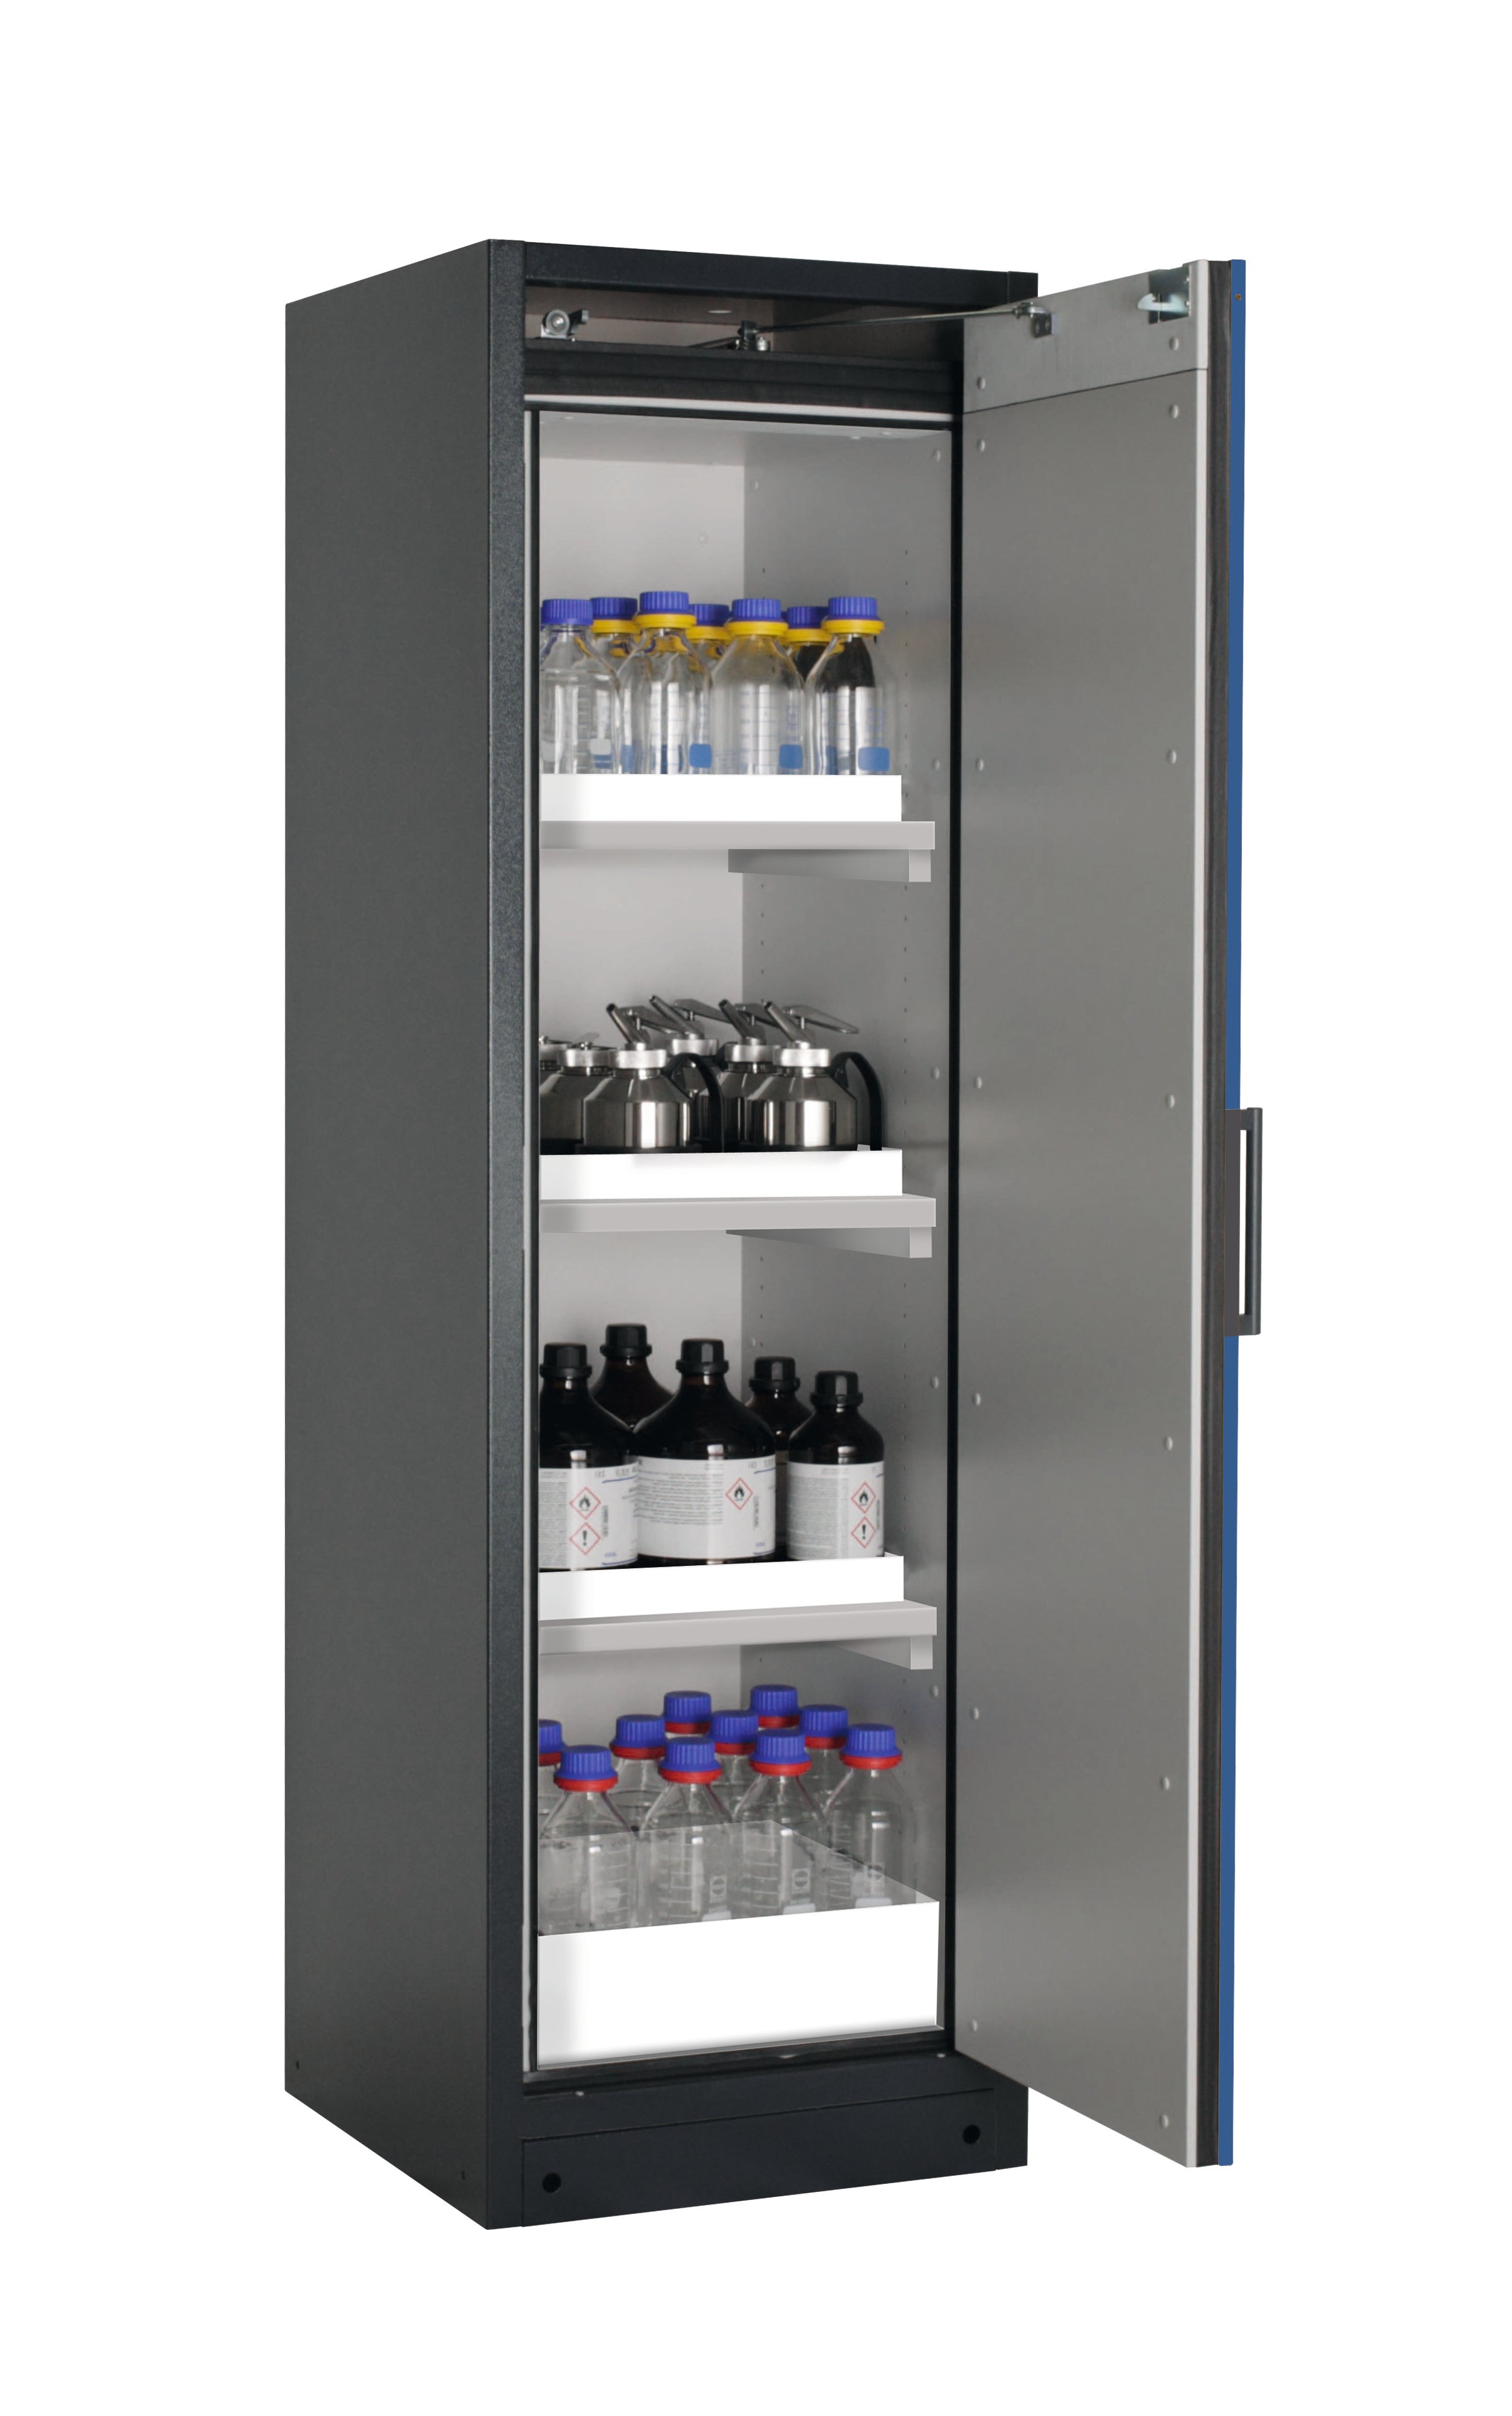 Type 90 safety storage cabinet Q-PEGASUS-90 model Q90.195.060.WDACR in gentian blue RAL 5010 with 3x tray shelf (standard) (polypropylene),